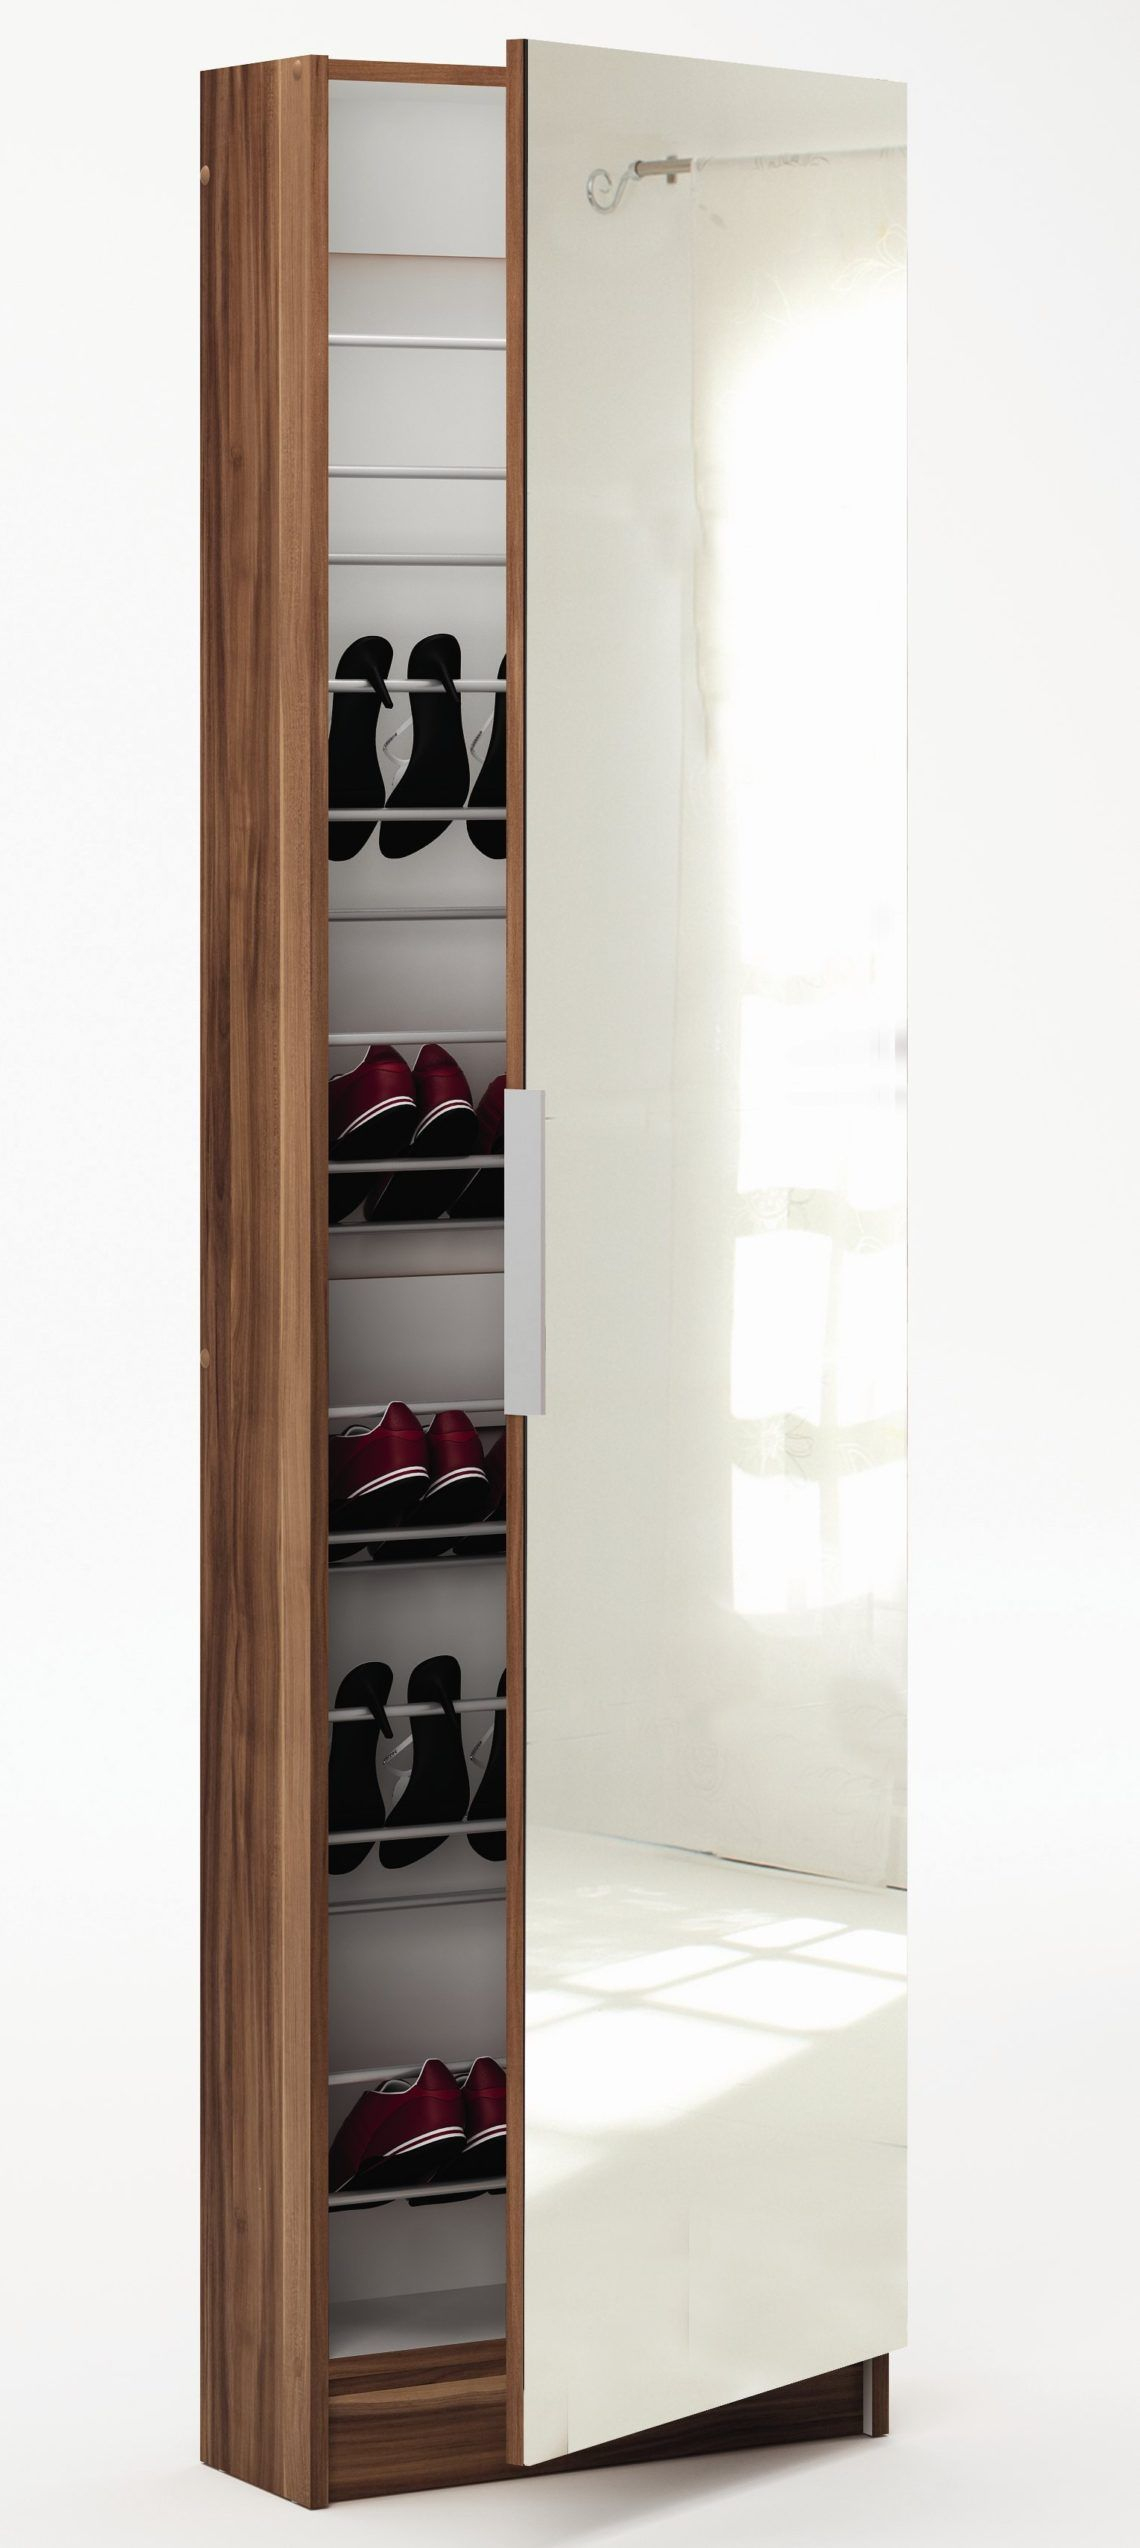 Beau Meuble Chaussures Alinea | Tall Cabinet Storage intérieur Meuble A Chaussure Alinea